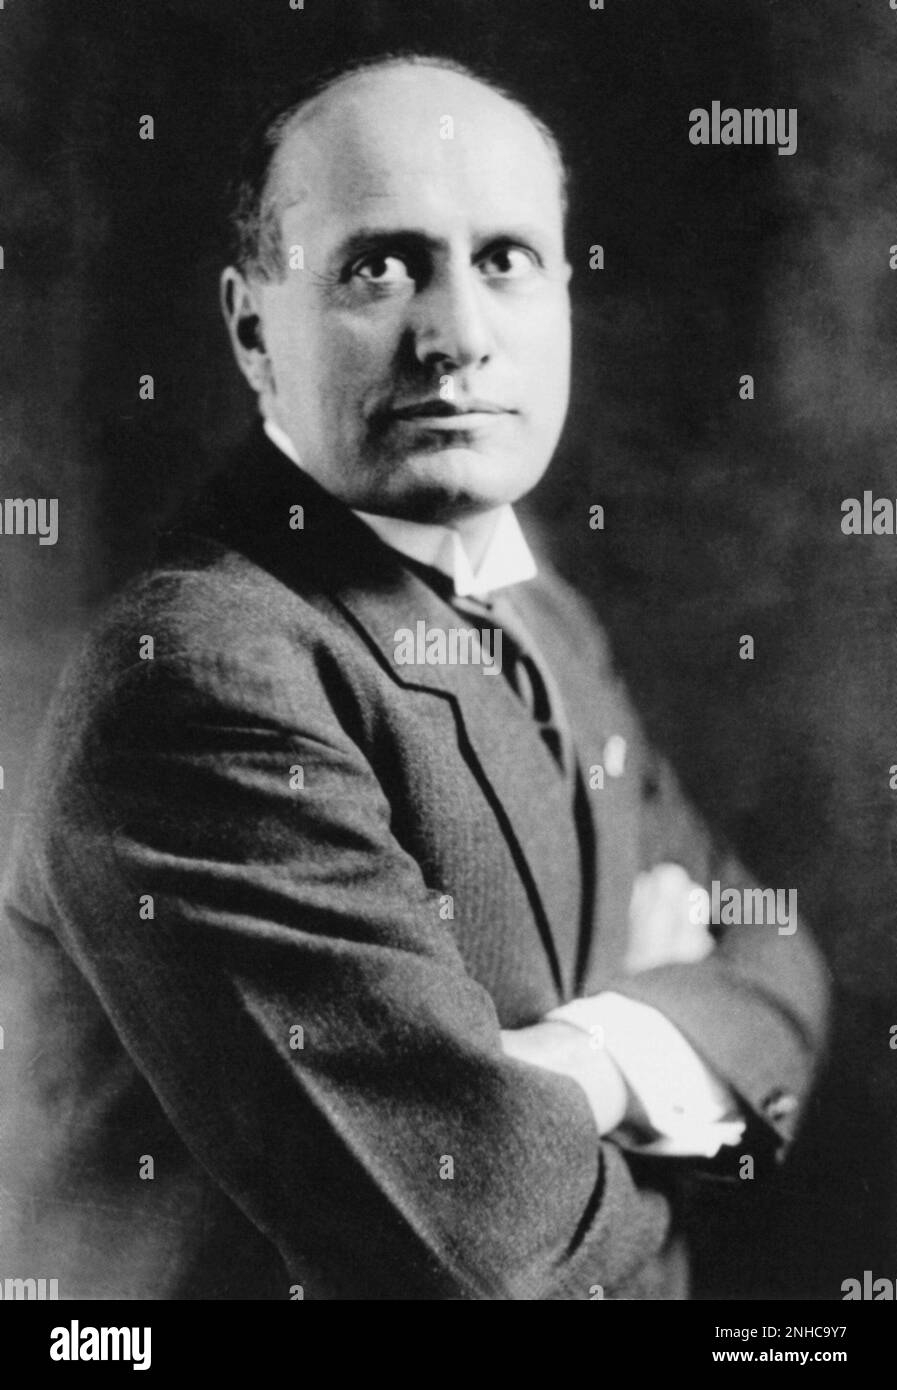 1923 CA, ITALIE : le dictateur fasciste italien Duce BENITO MUSSOLINI ( 1883 - 1945 ) - Seconda Guerra Mondiale - Seconde Guerre mondiale - FASCISMO - FASCISTA - FASCIO - sourire - sorriso - cravate - cravatta - collier - colletto ---- Archivio GBB Banque D'Images